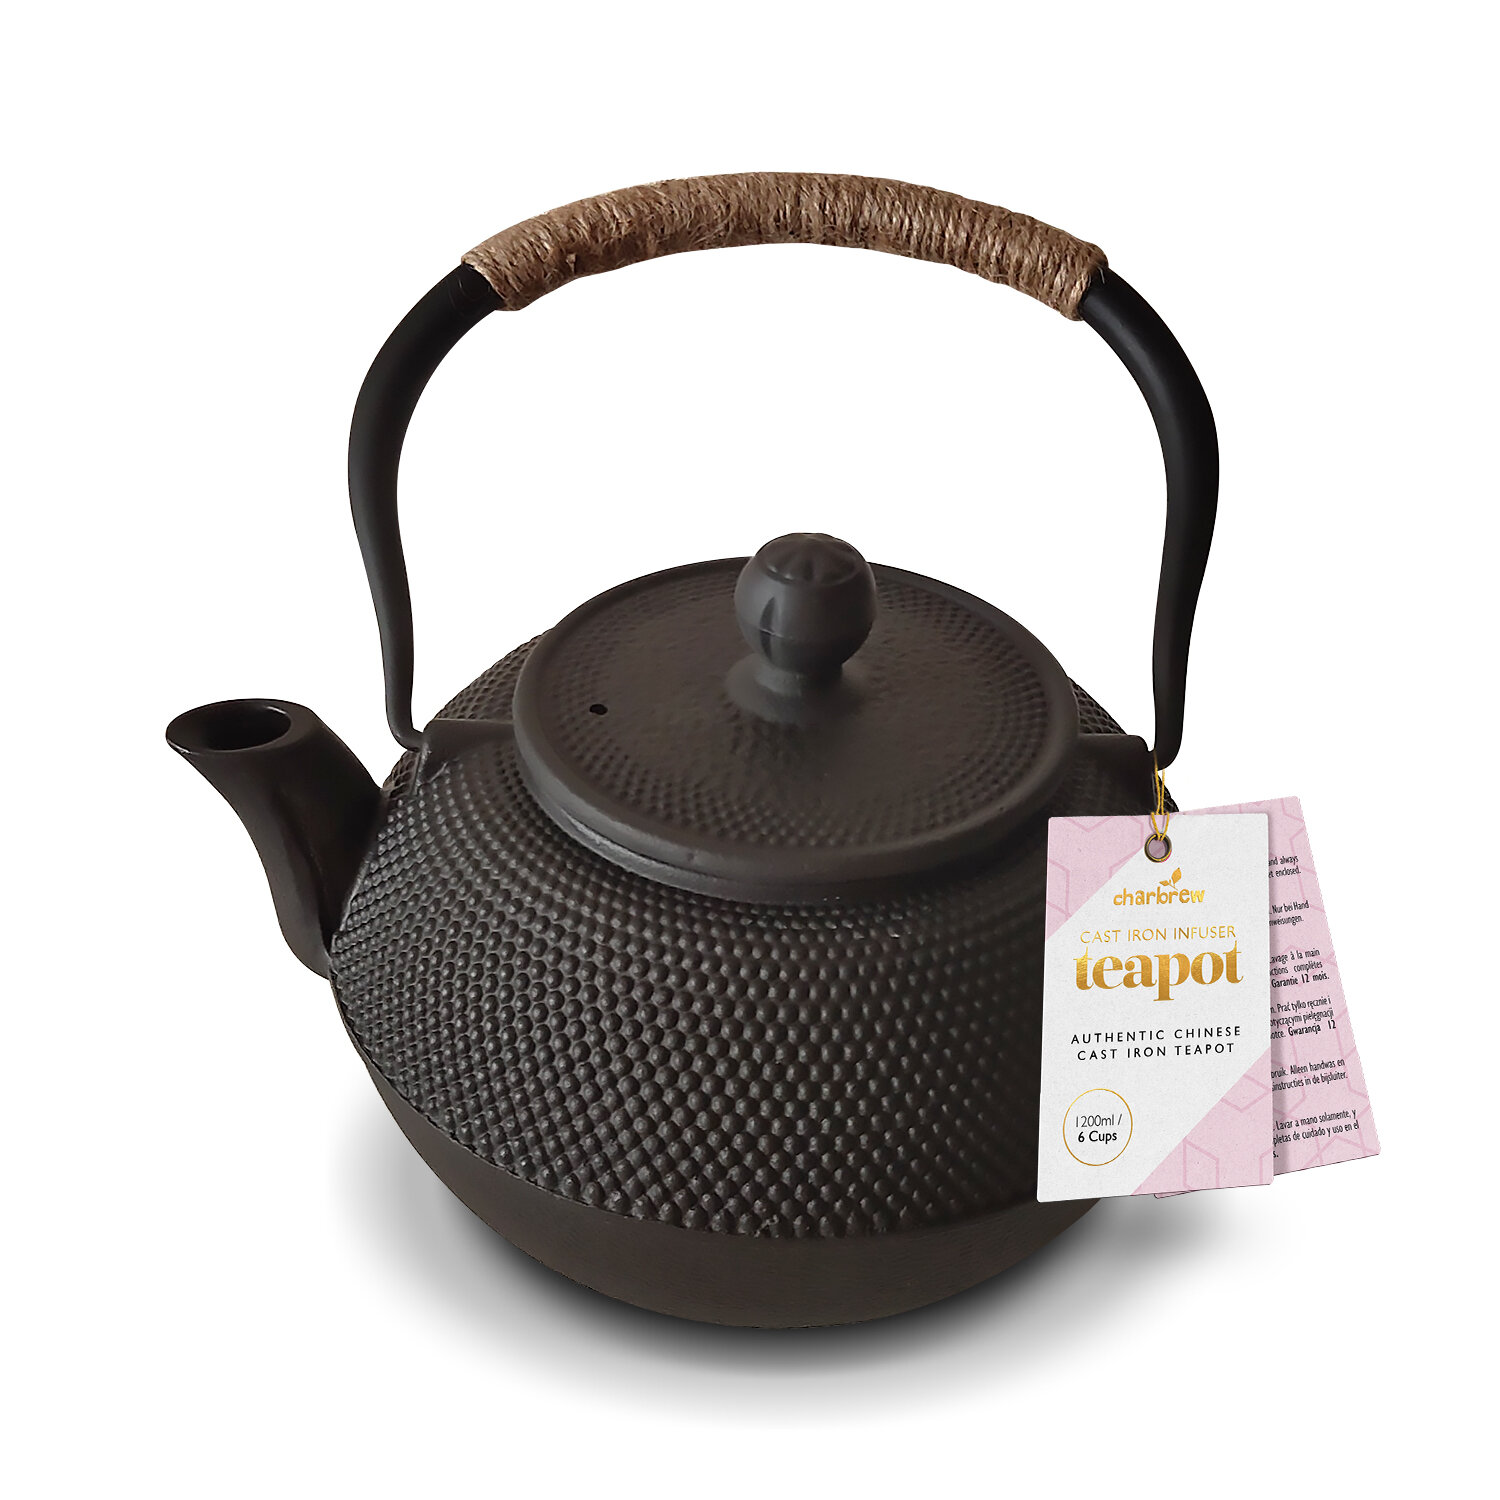 Classic Black Cast Iron Teapot by Charbrew 1200ml Tea Pot Kettle 